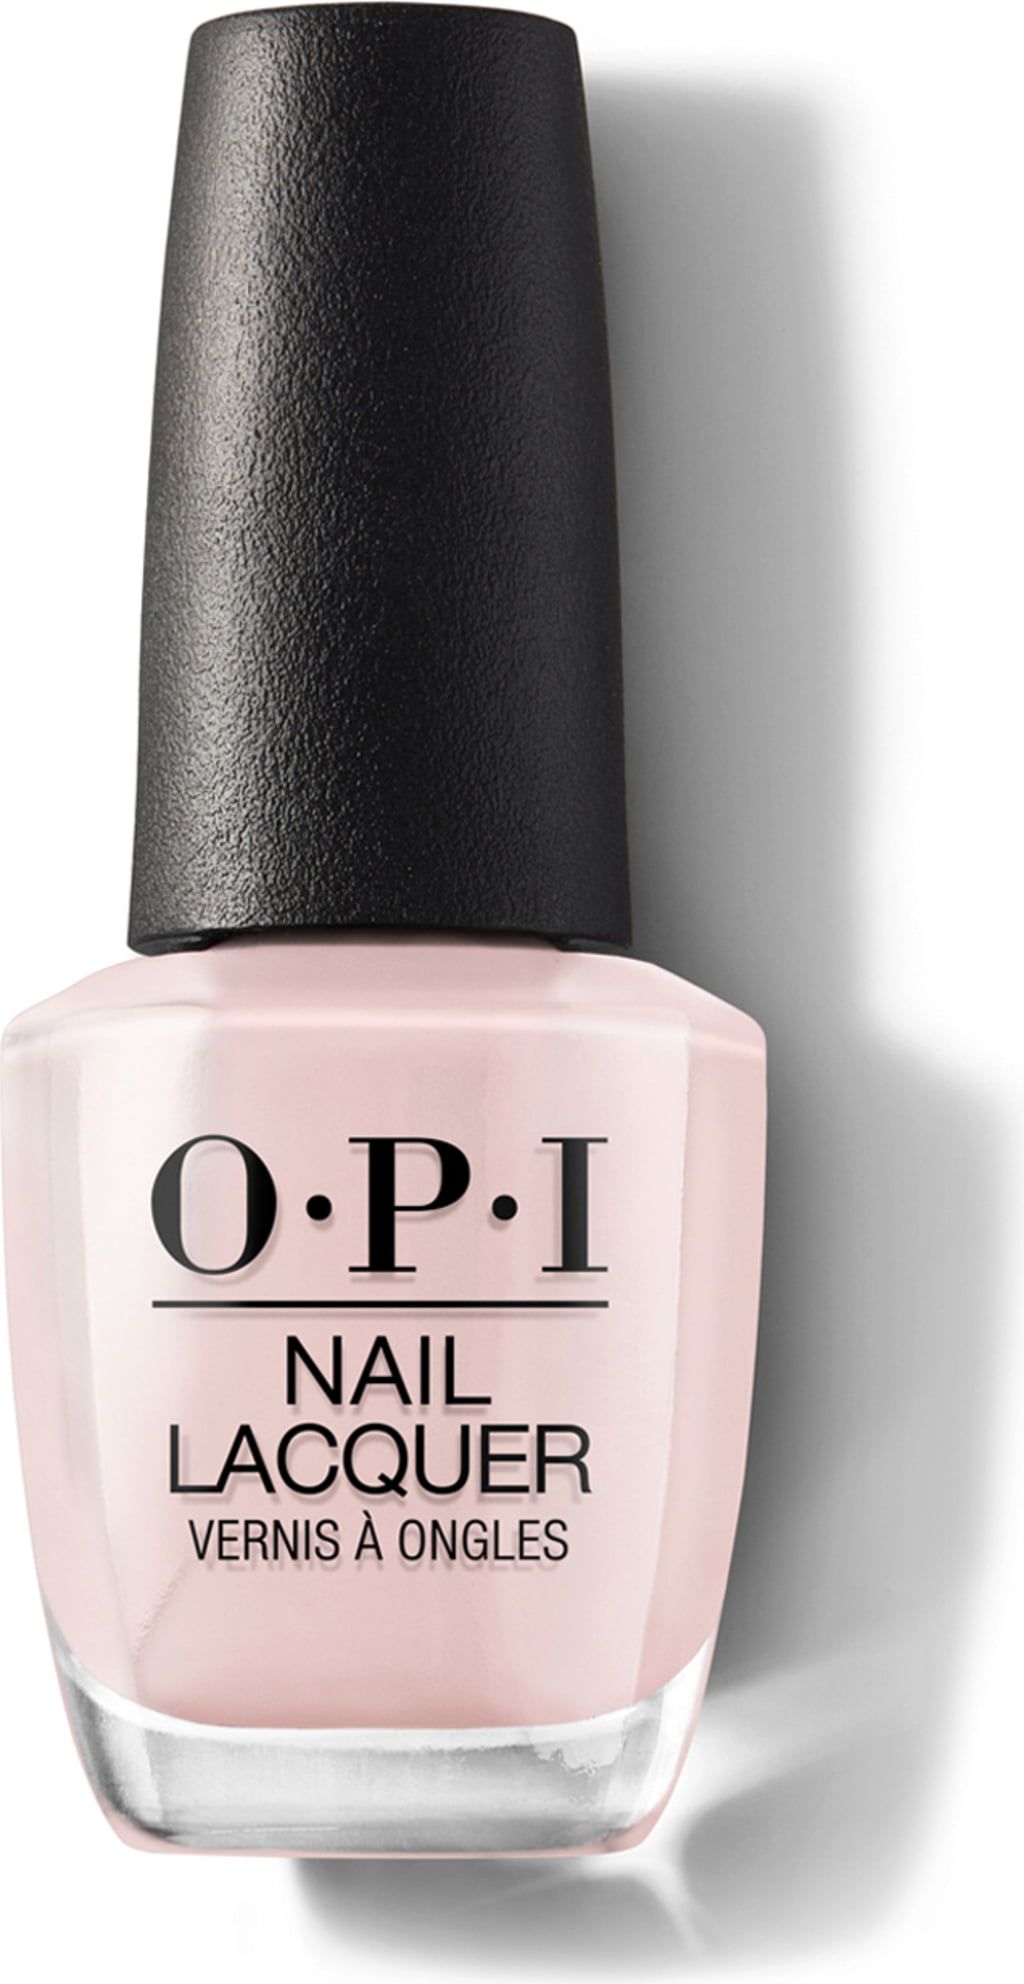 Metallic Composition Nail Lacquer Nail Polish, Pinks - OPI | Ulta Beauty